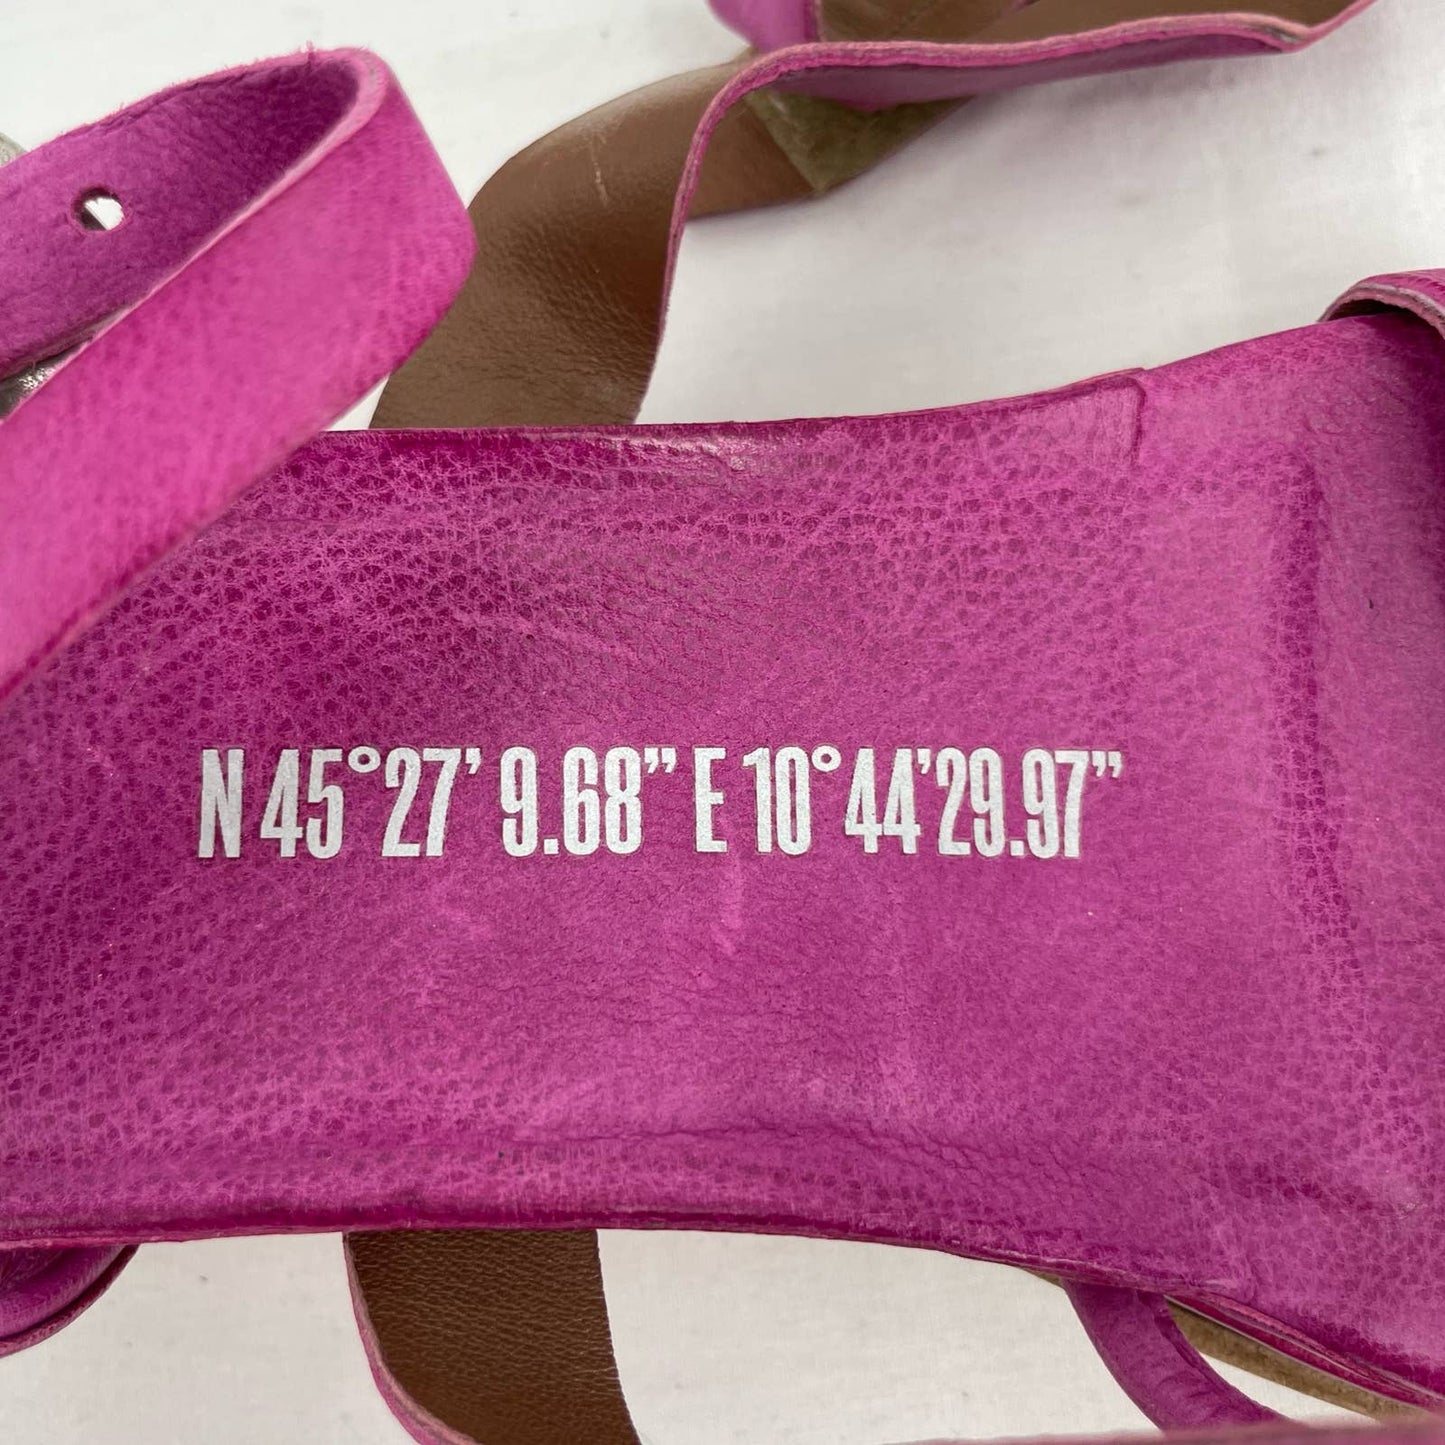 A.S.98 AS98 Labo Hot Pink Fuchsia Leather Wrap Platform Gladiator Sandals Size EU 39